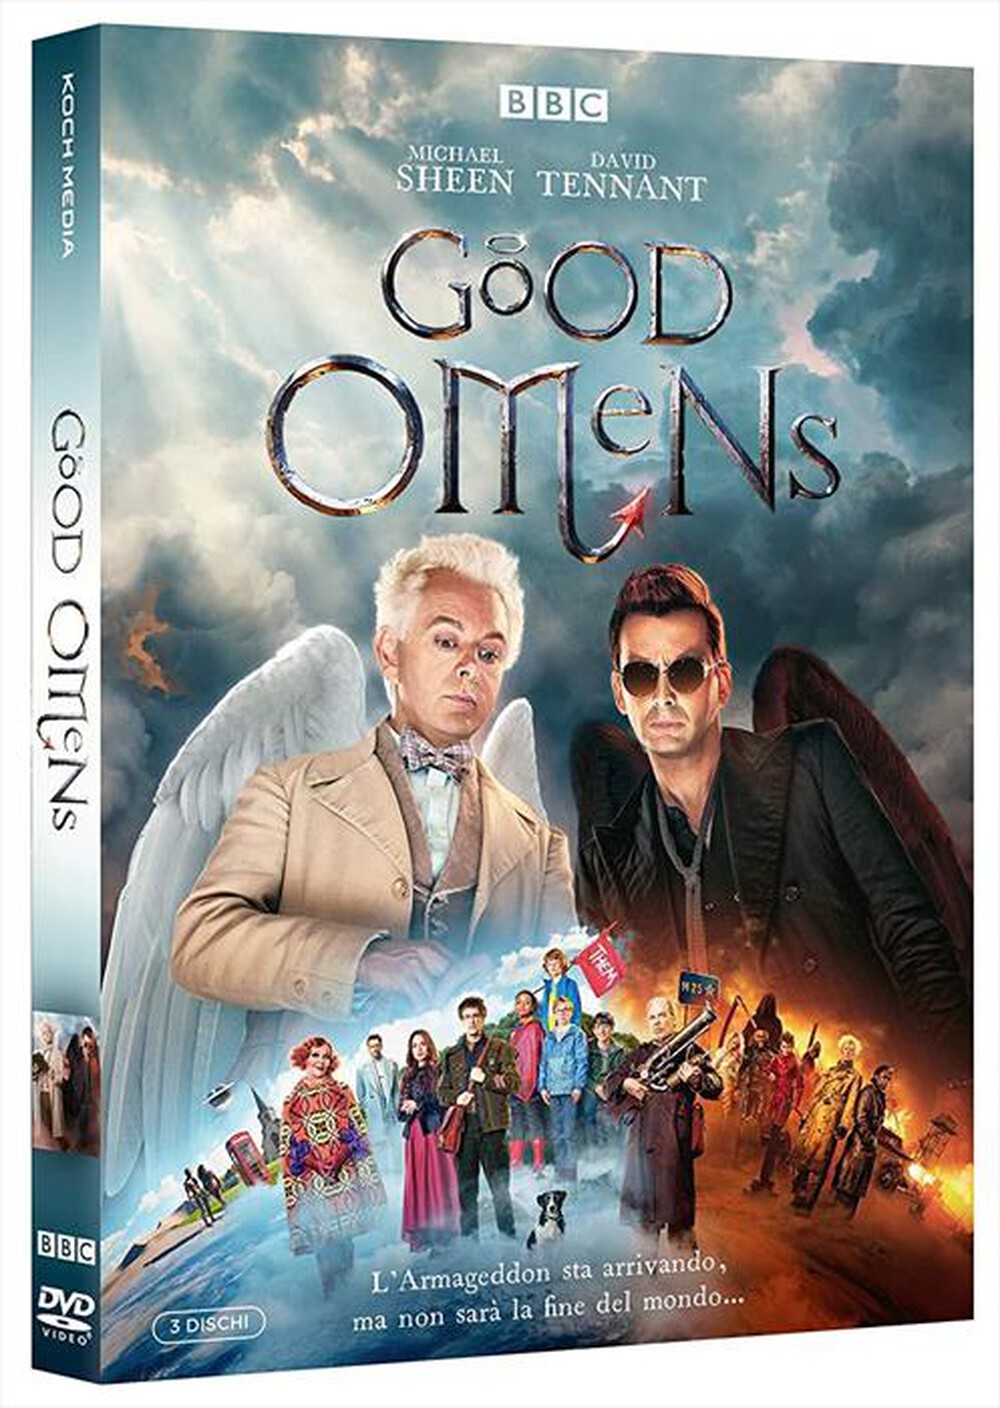 "BBC - Good Omens (3 Dvd)"